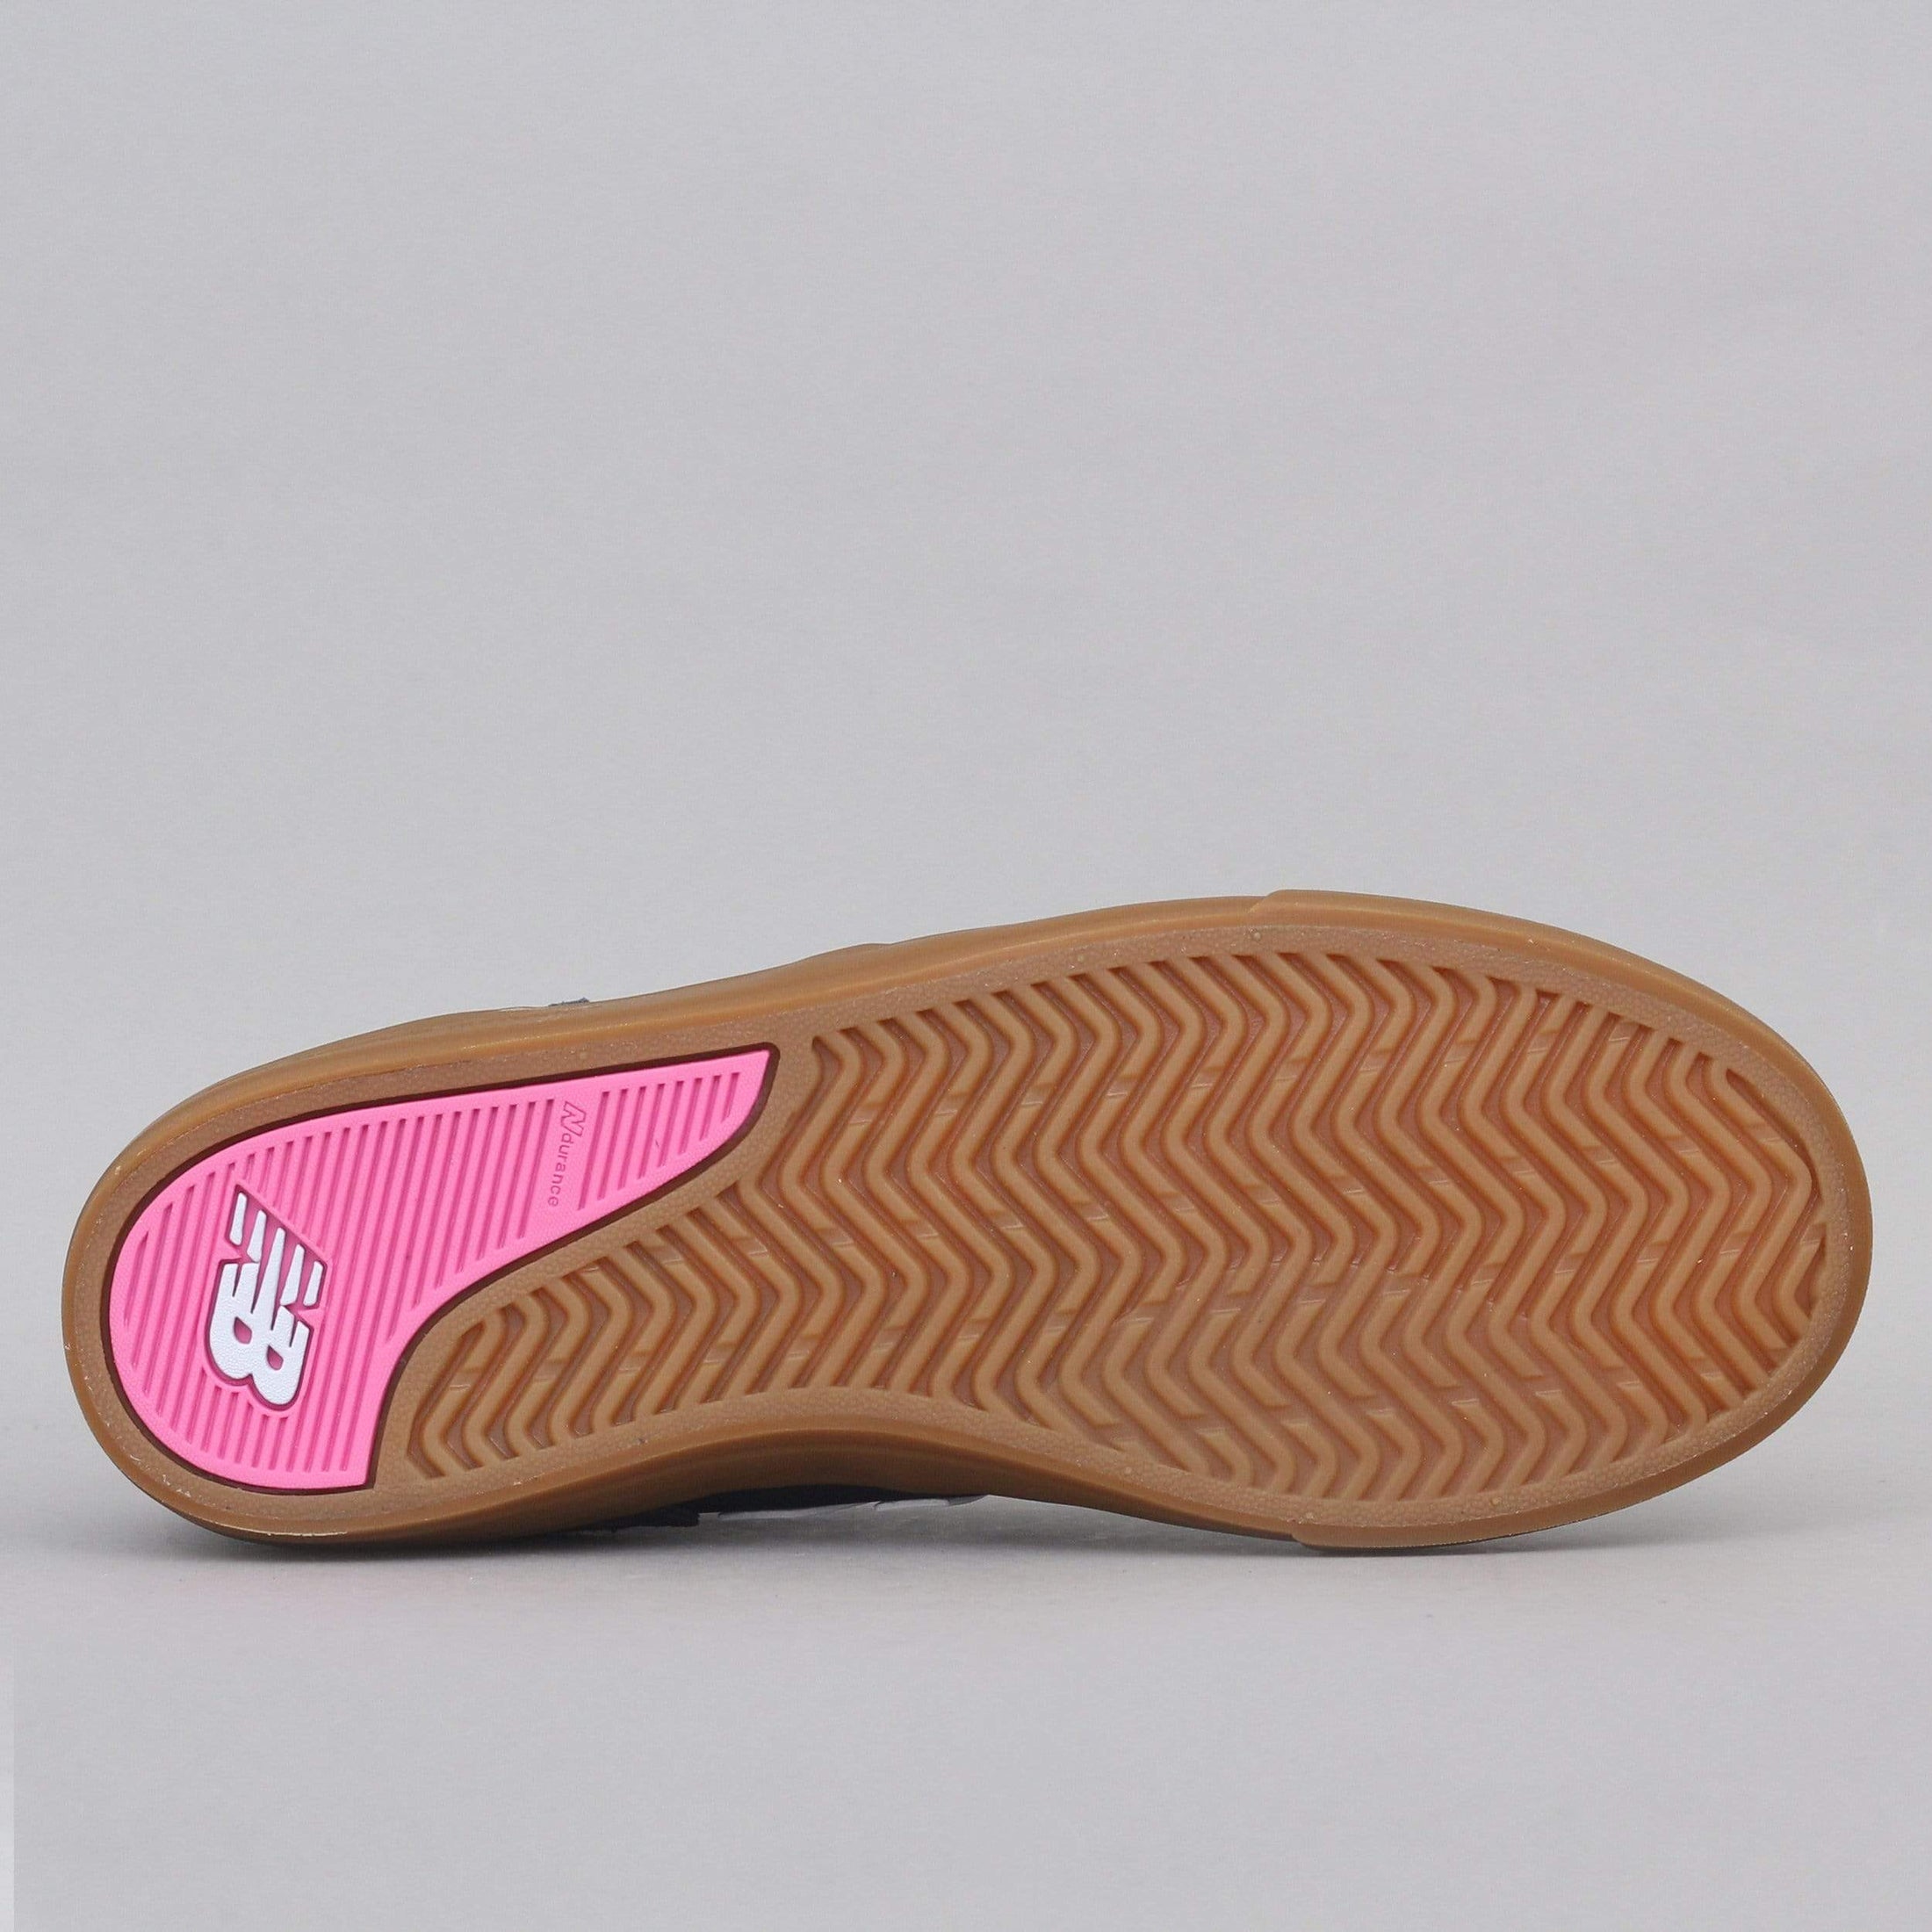 New Balance Jamie Foy 306 Shoes Navy / Pink